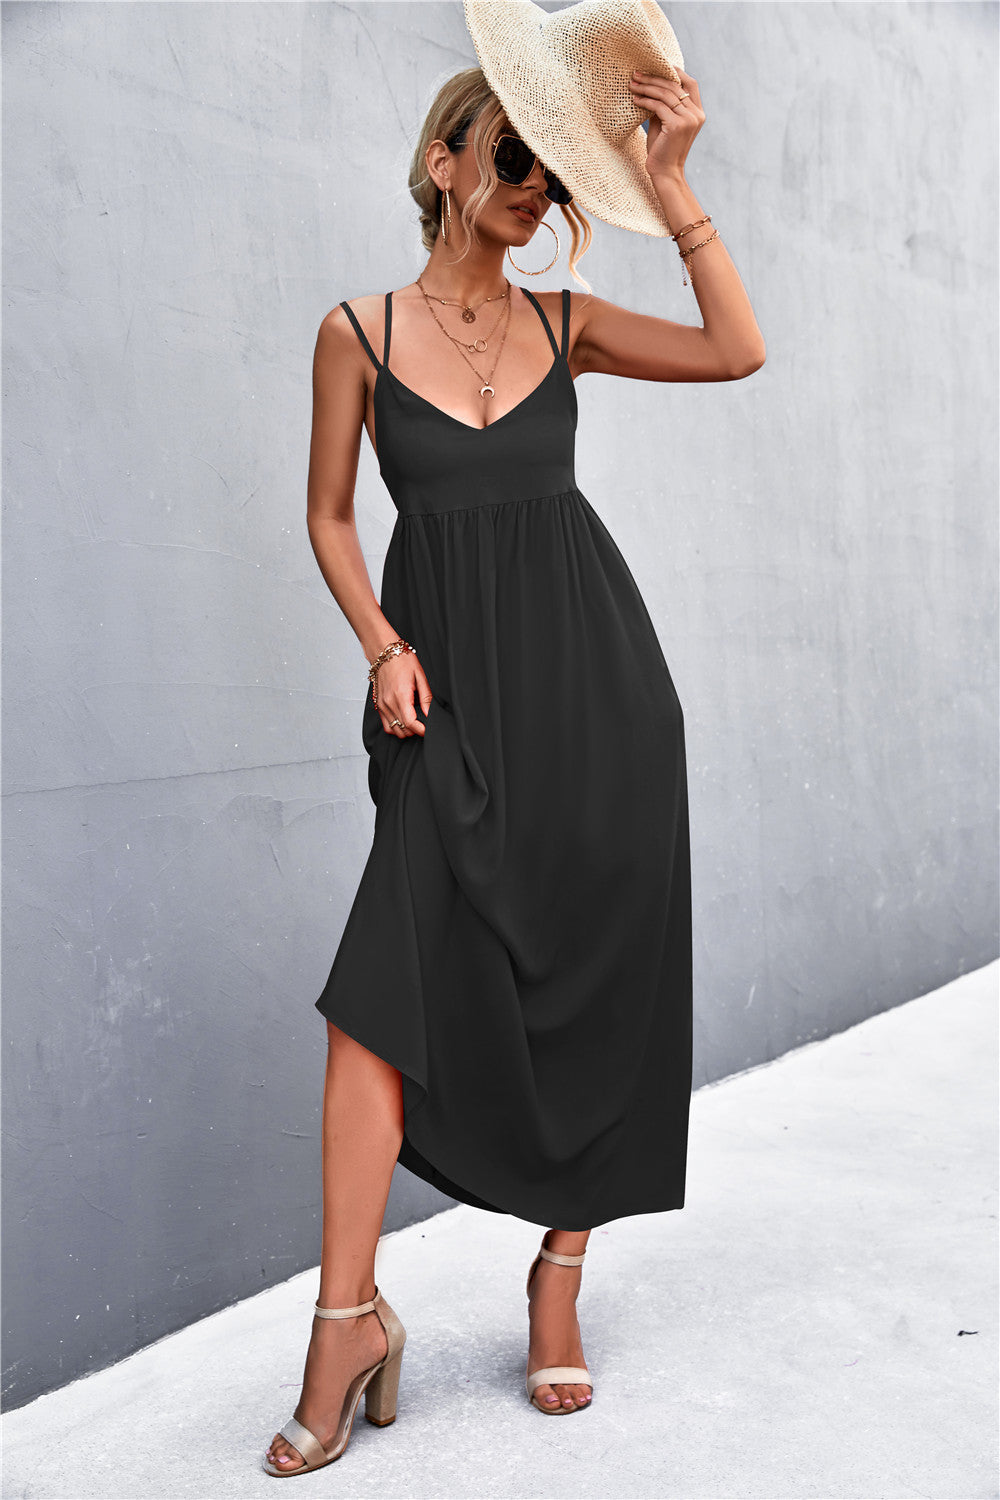 Parisian Chick Double Strap Tie Back Dress Black S Dresses by Vim&Vigor | Vim&Vigor Boutique